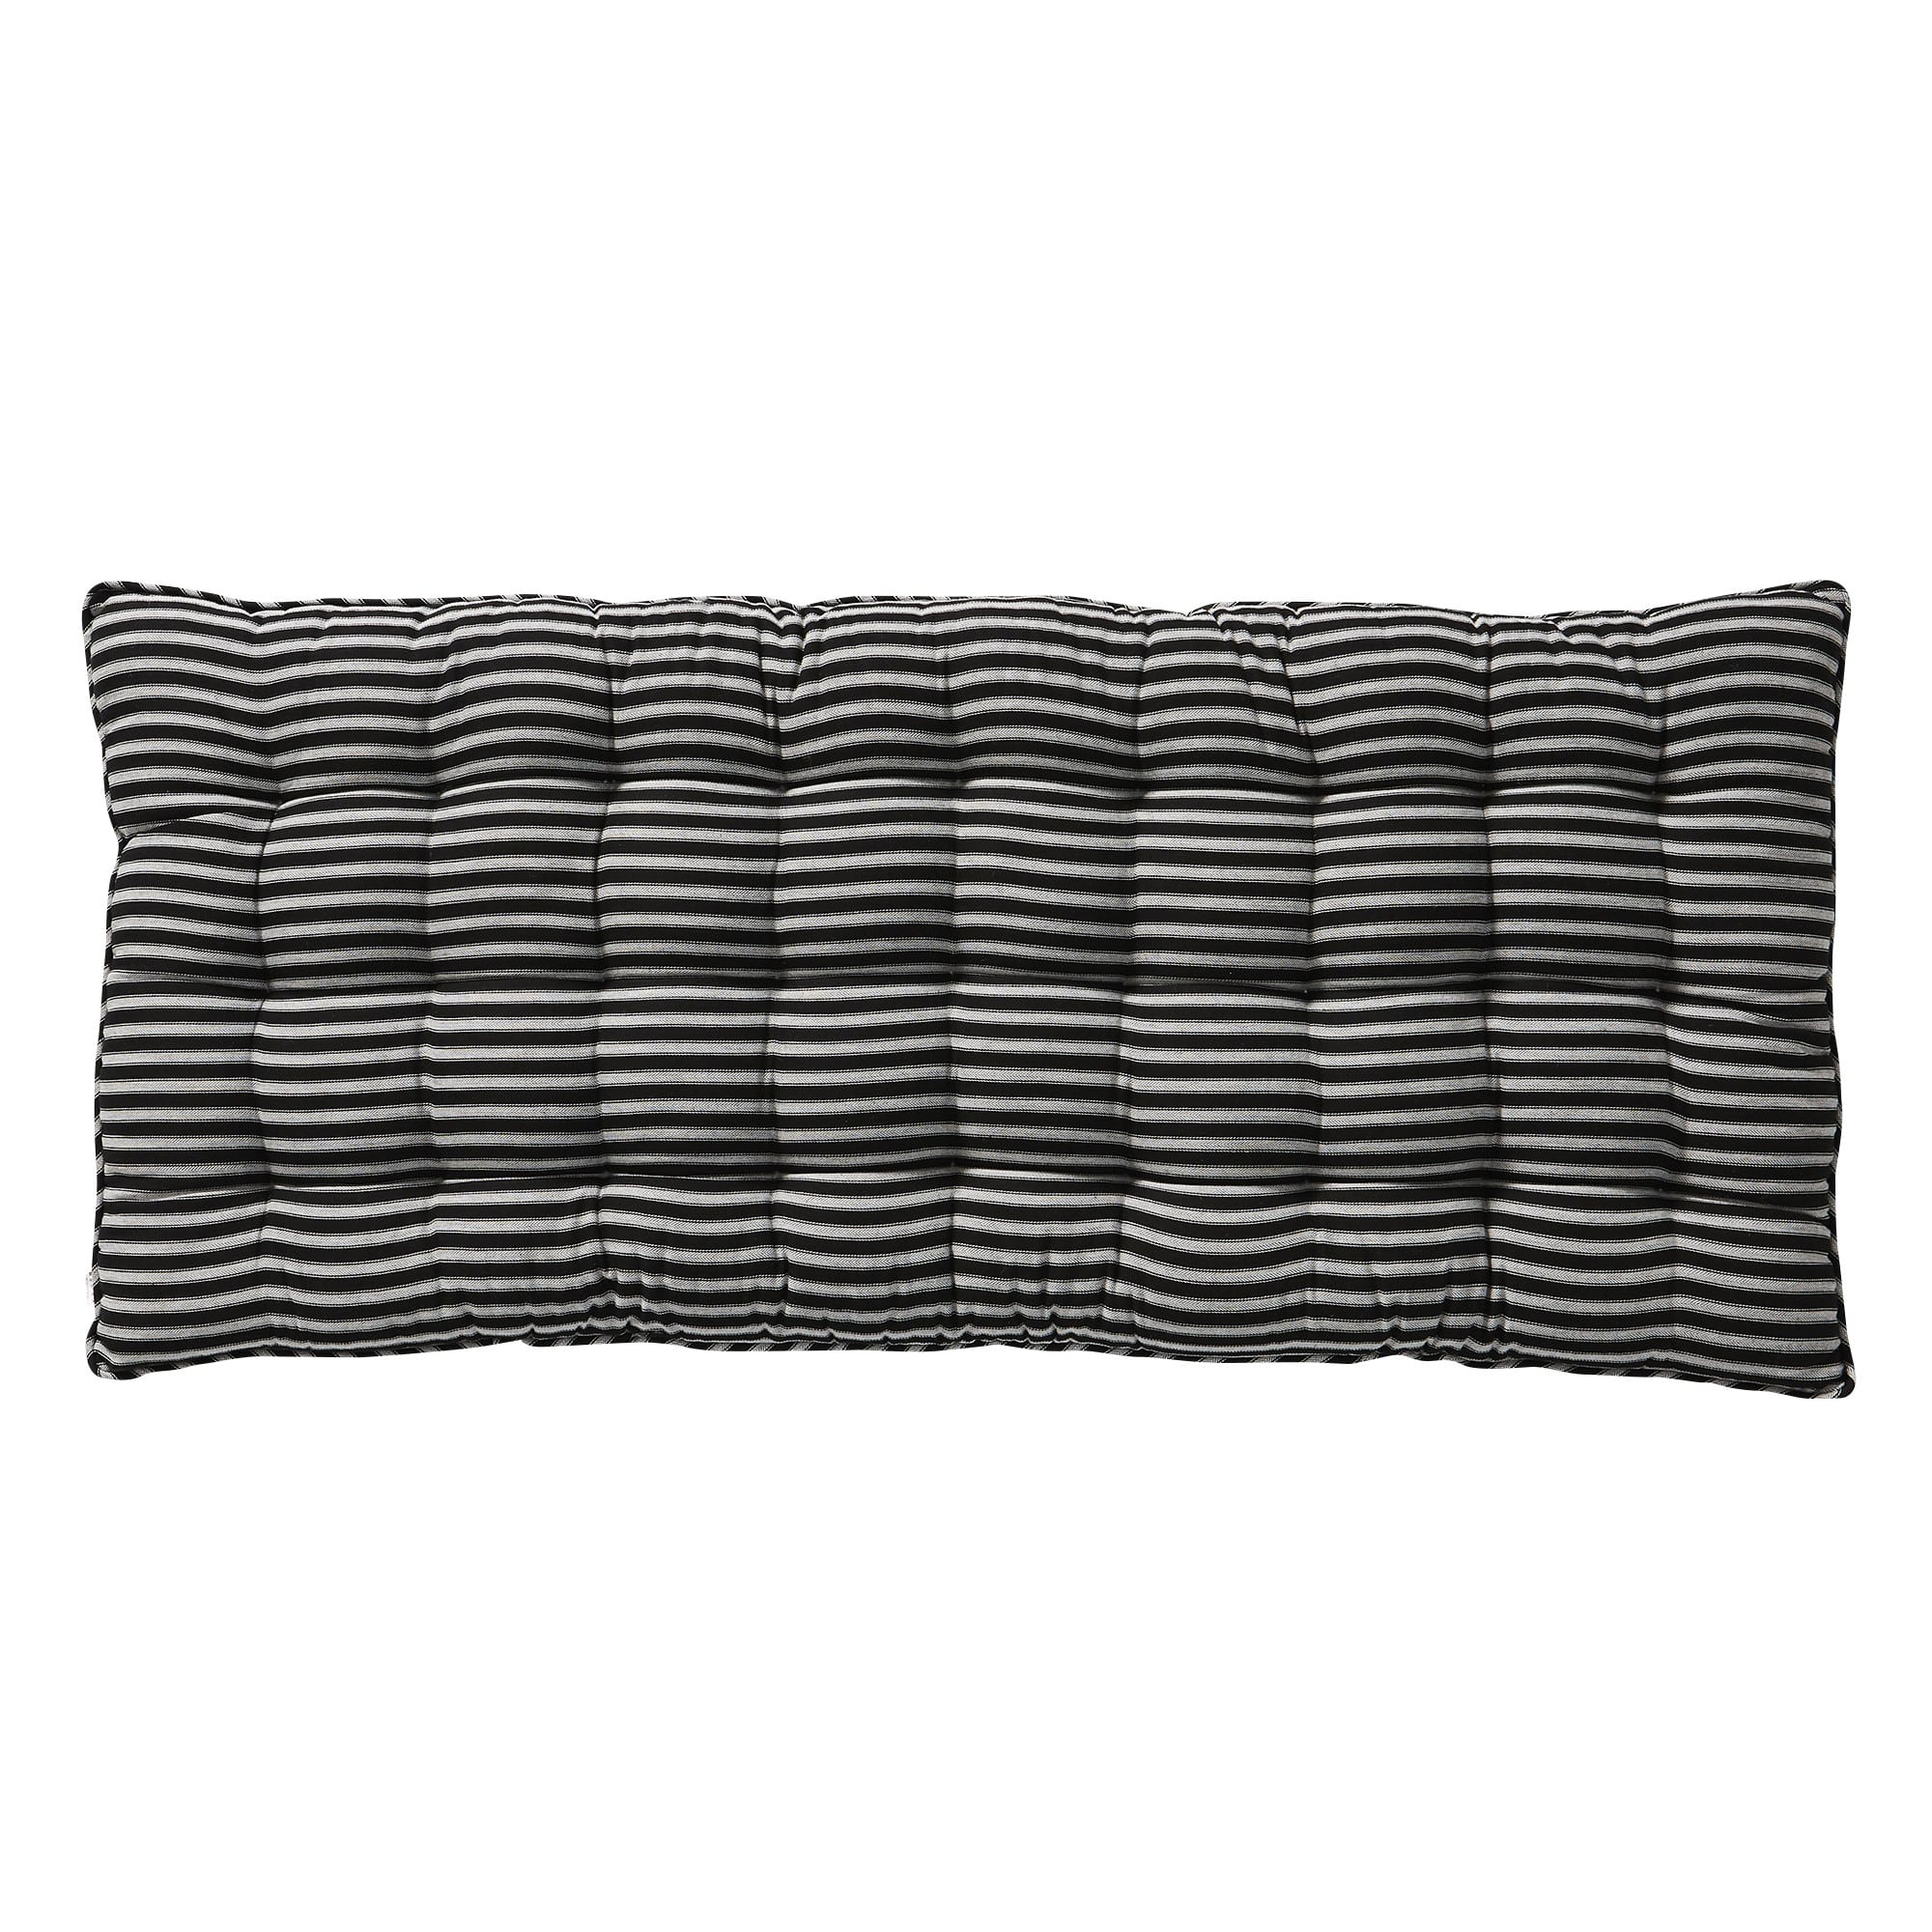 Garmine cushion 132x55 cm.